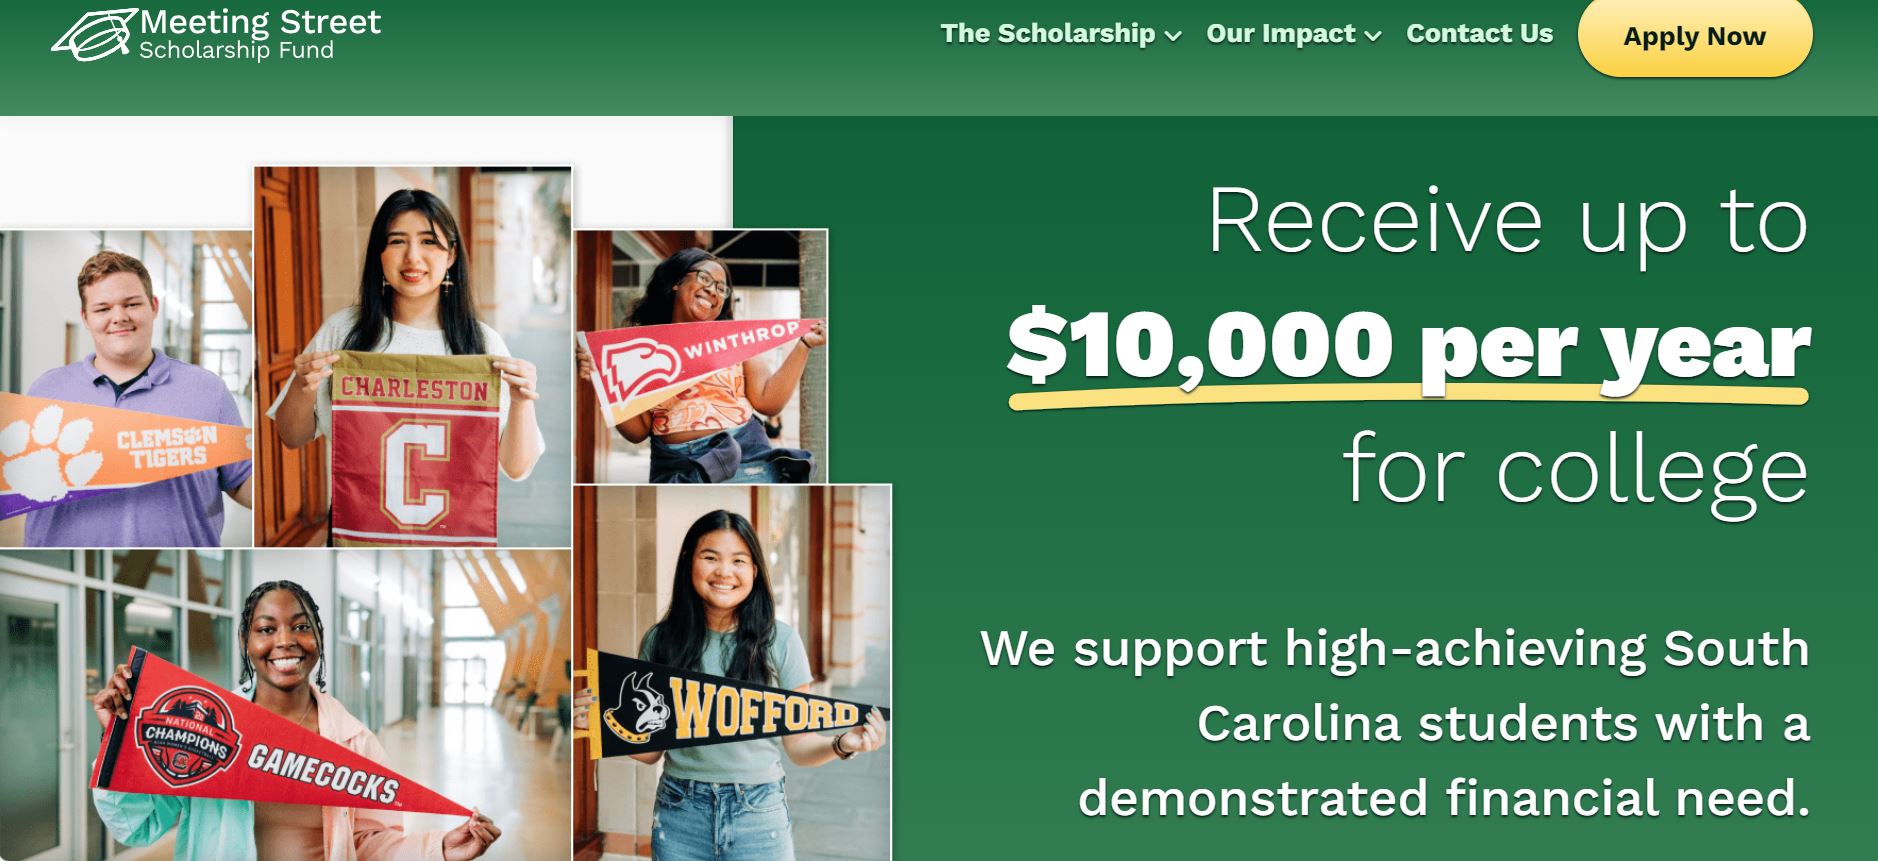 Meeting Street Scholarship Fund enhances website